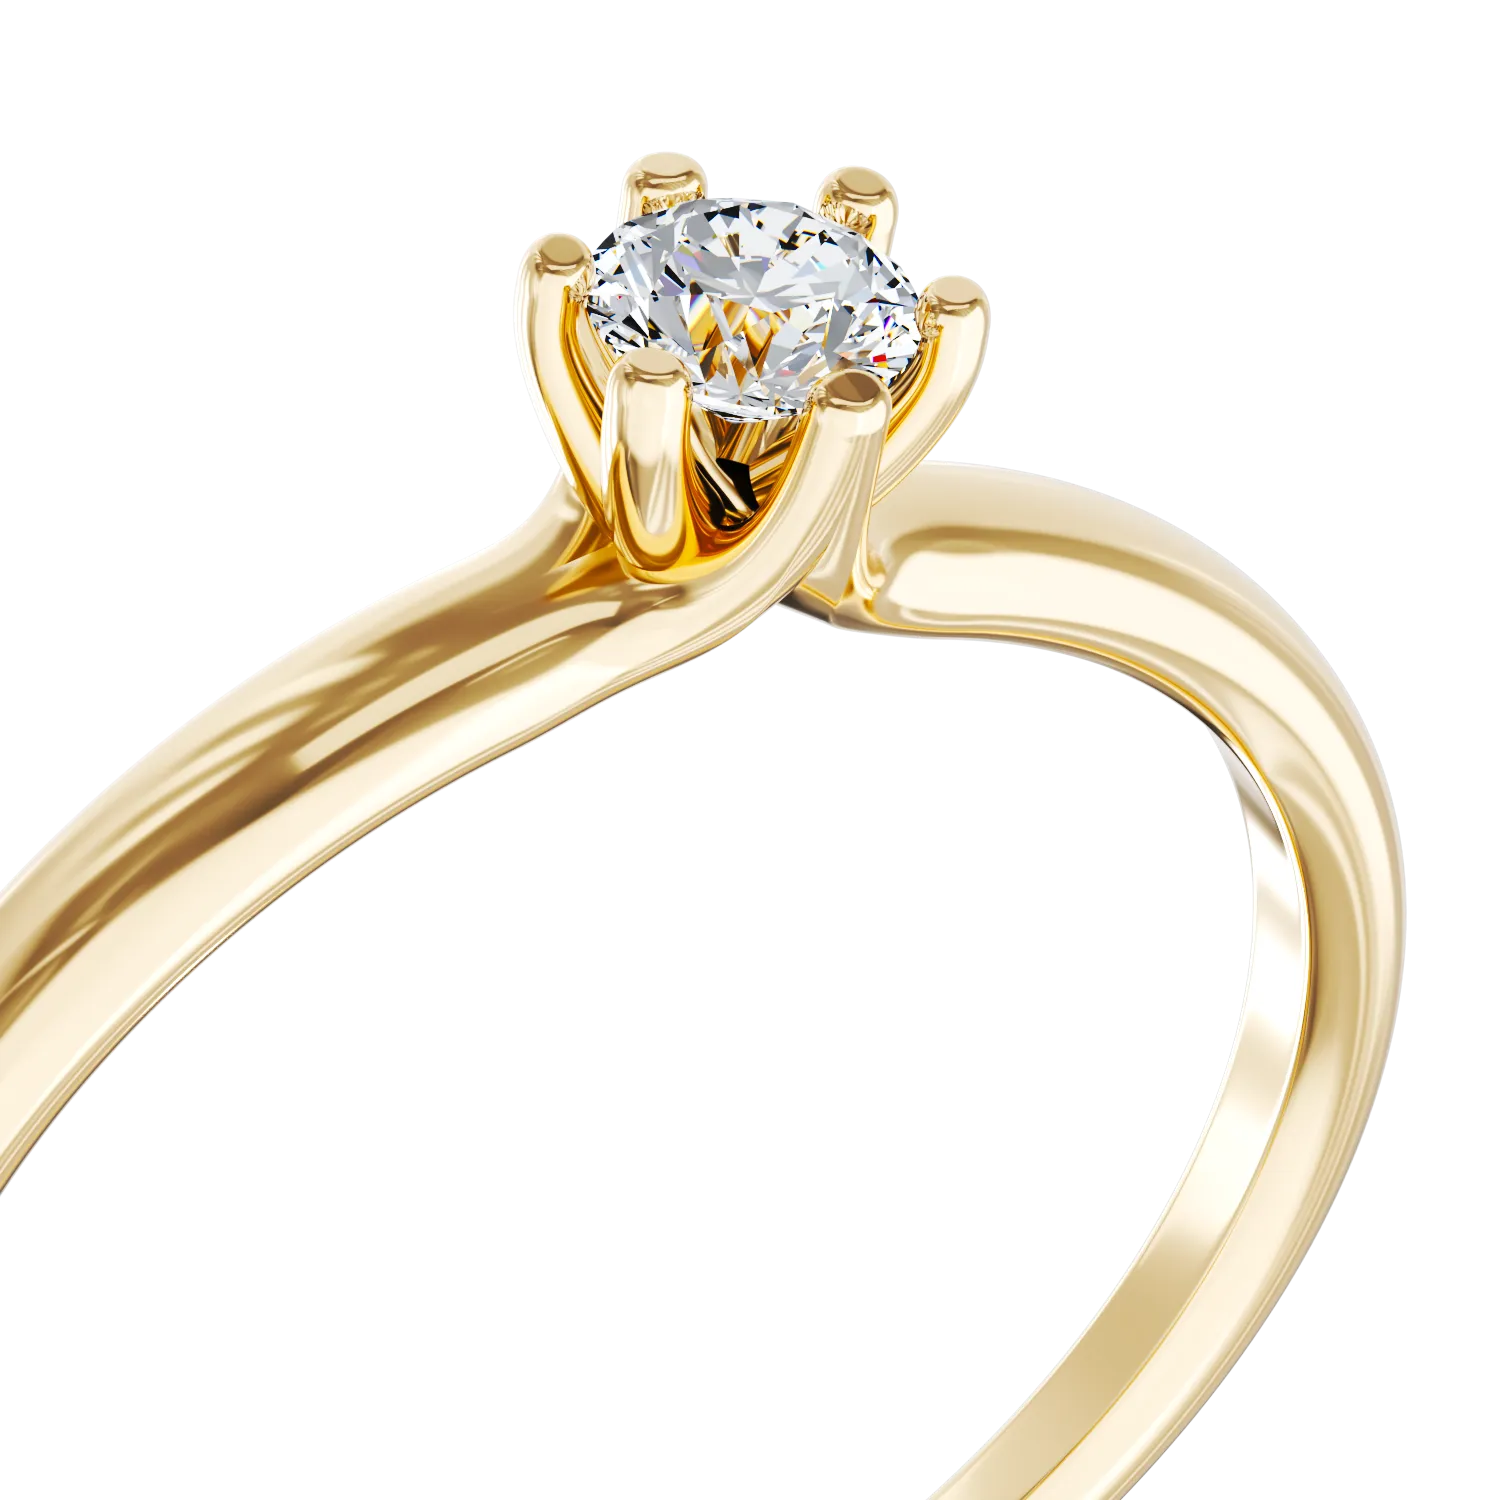 Inel de logodna din aur galben de 18K cu un diamant solitaire de 0.205ct